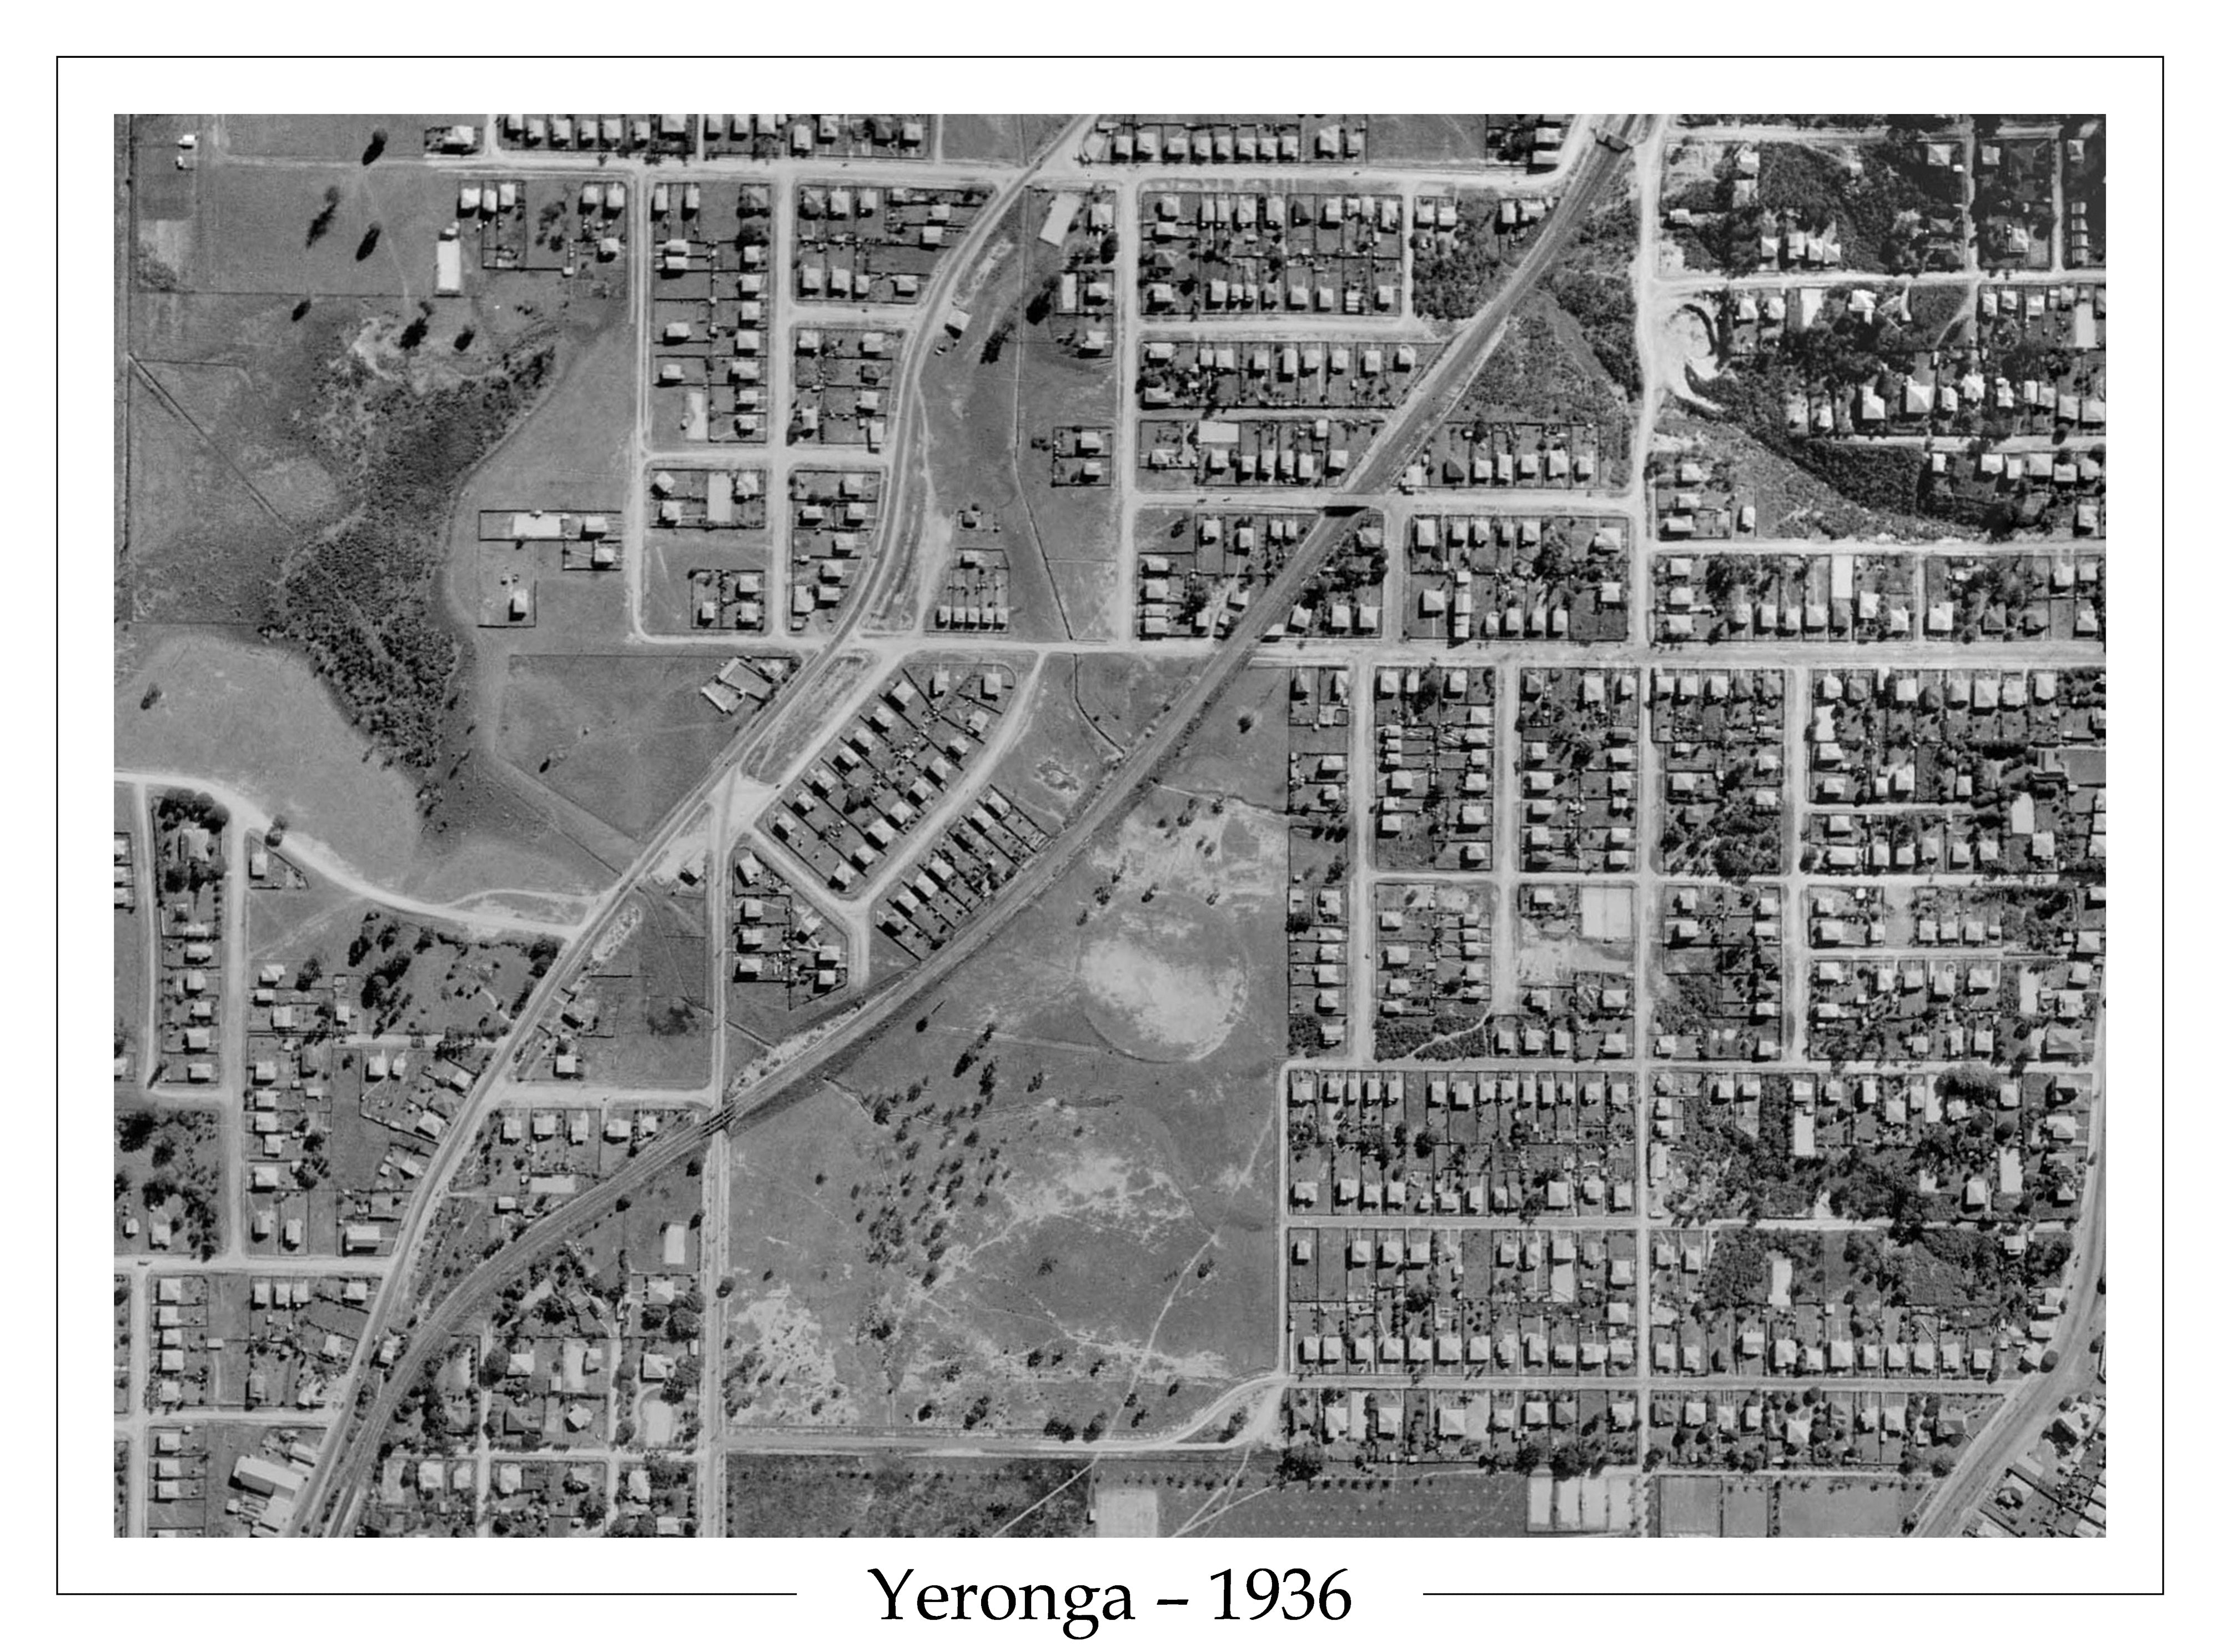 1936 Yeronga - Aerial Photo - Fairfield Road